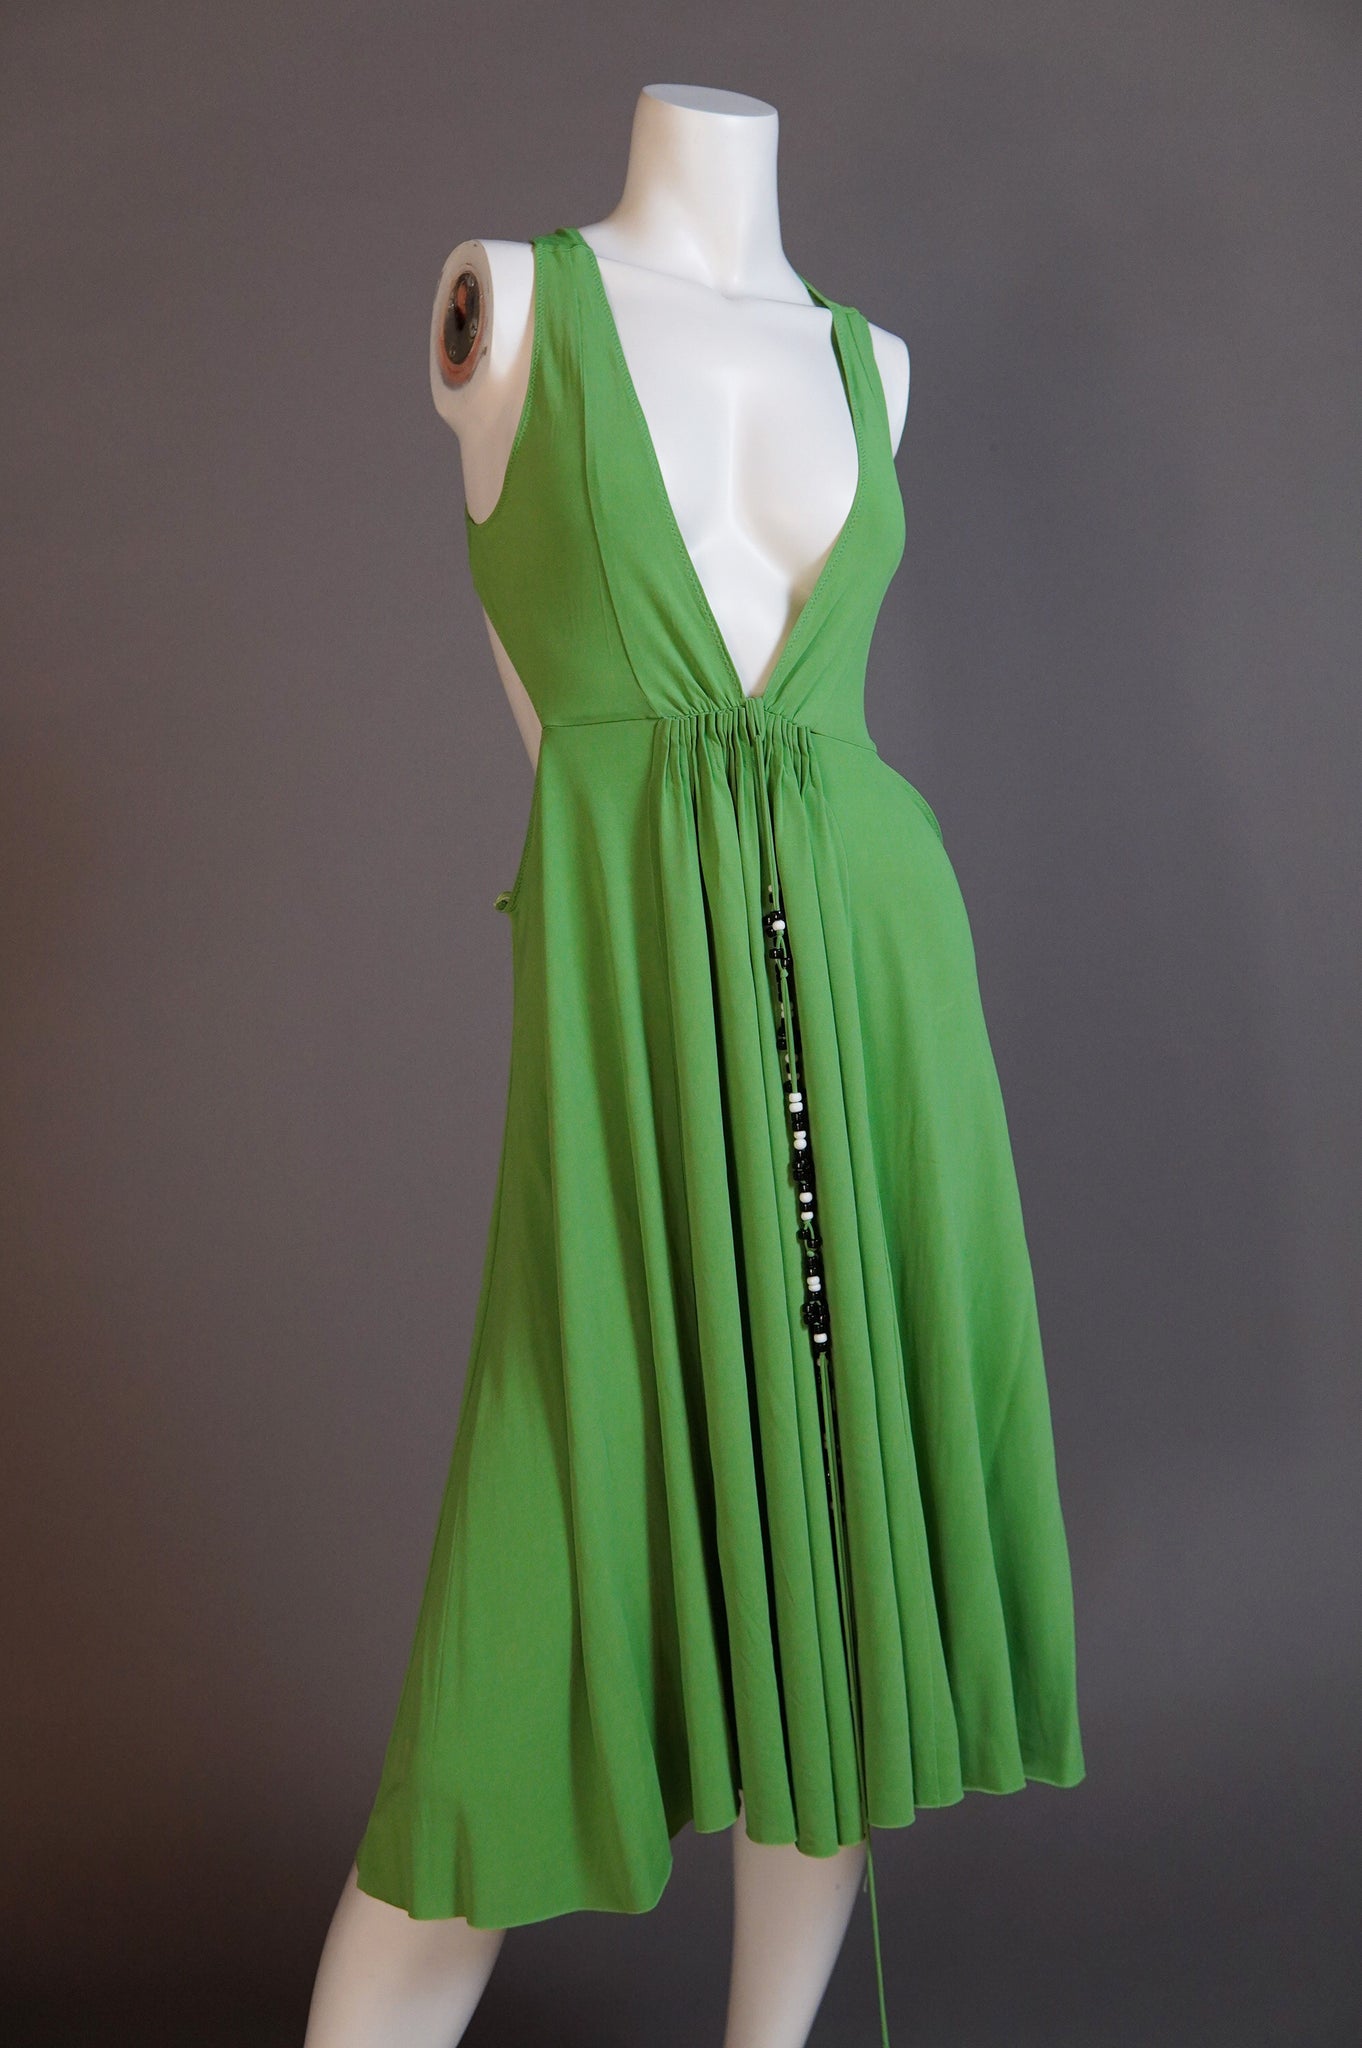 S/S 2004 Chloé by Phoebe Philo slinky green runway dress - O/S